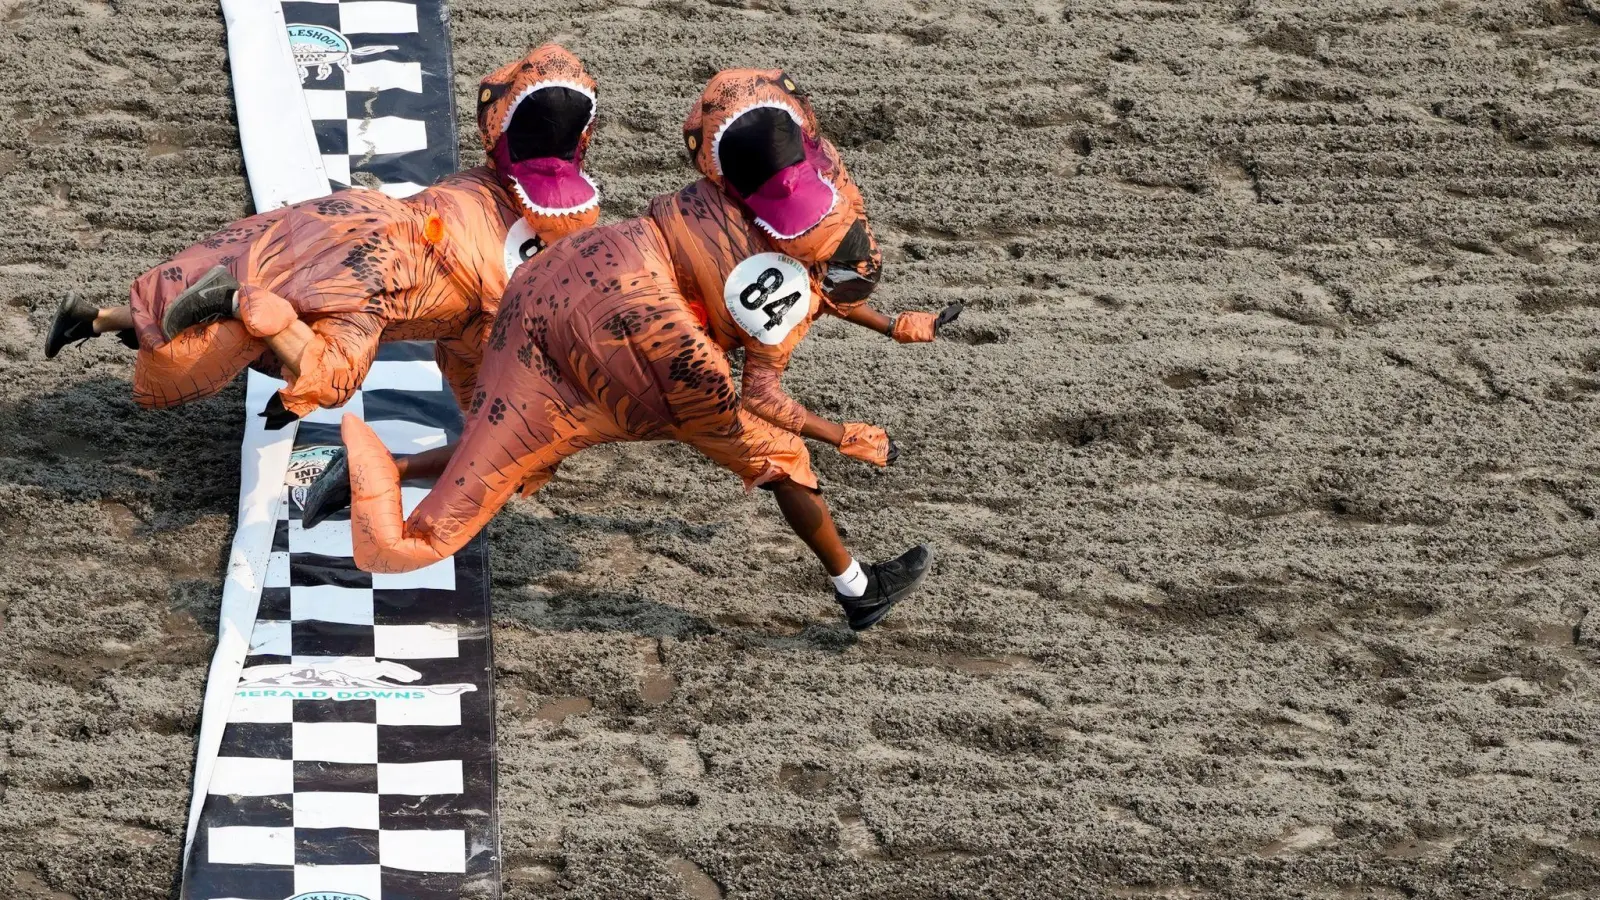 Am Ende gab es ein knappes Finish beim T-Rex World Championship Race in Emerald Downs. (Foto: Lindsey Wasson/AP)